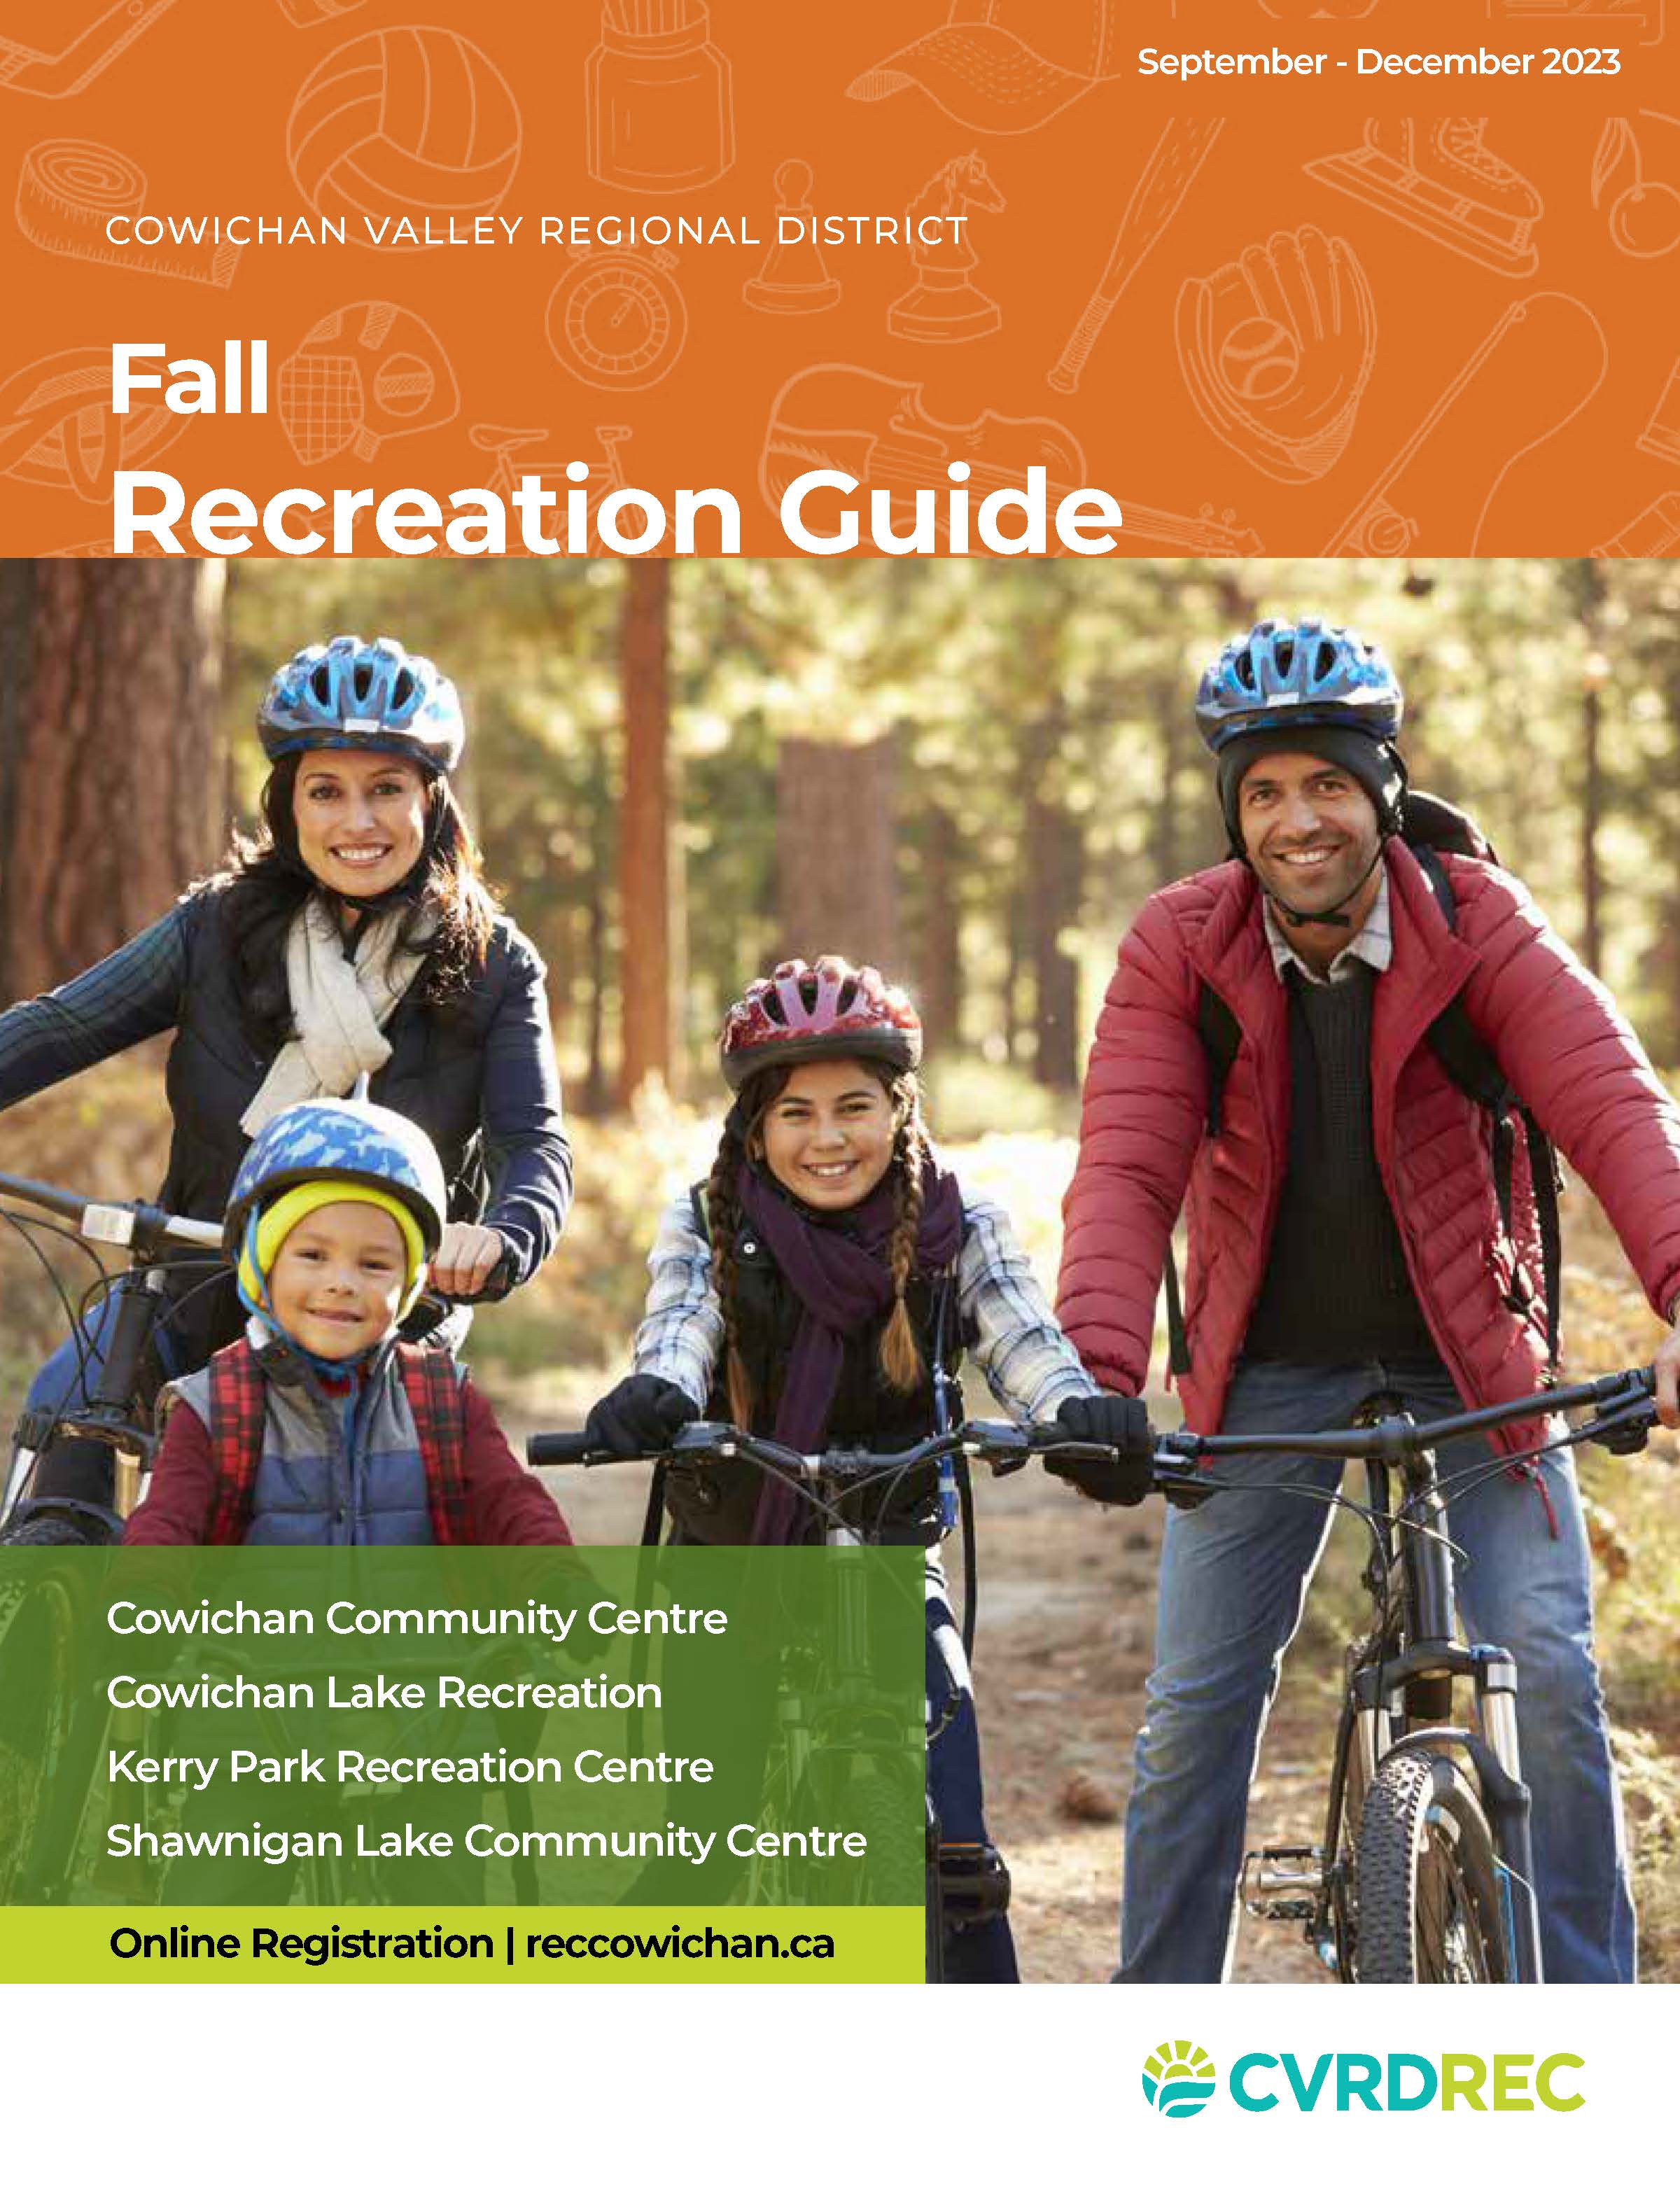 CVRD Recreation Guide Fall 2023 - guide cover